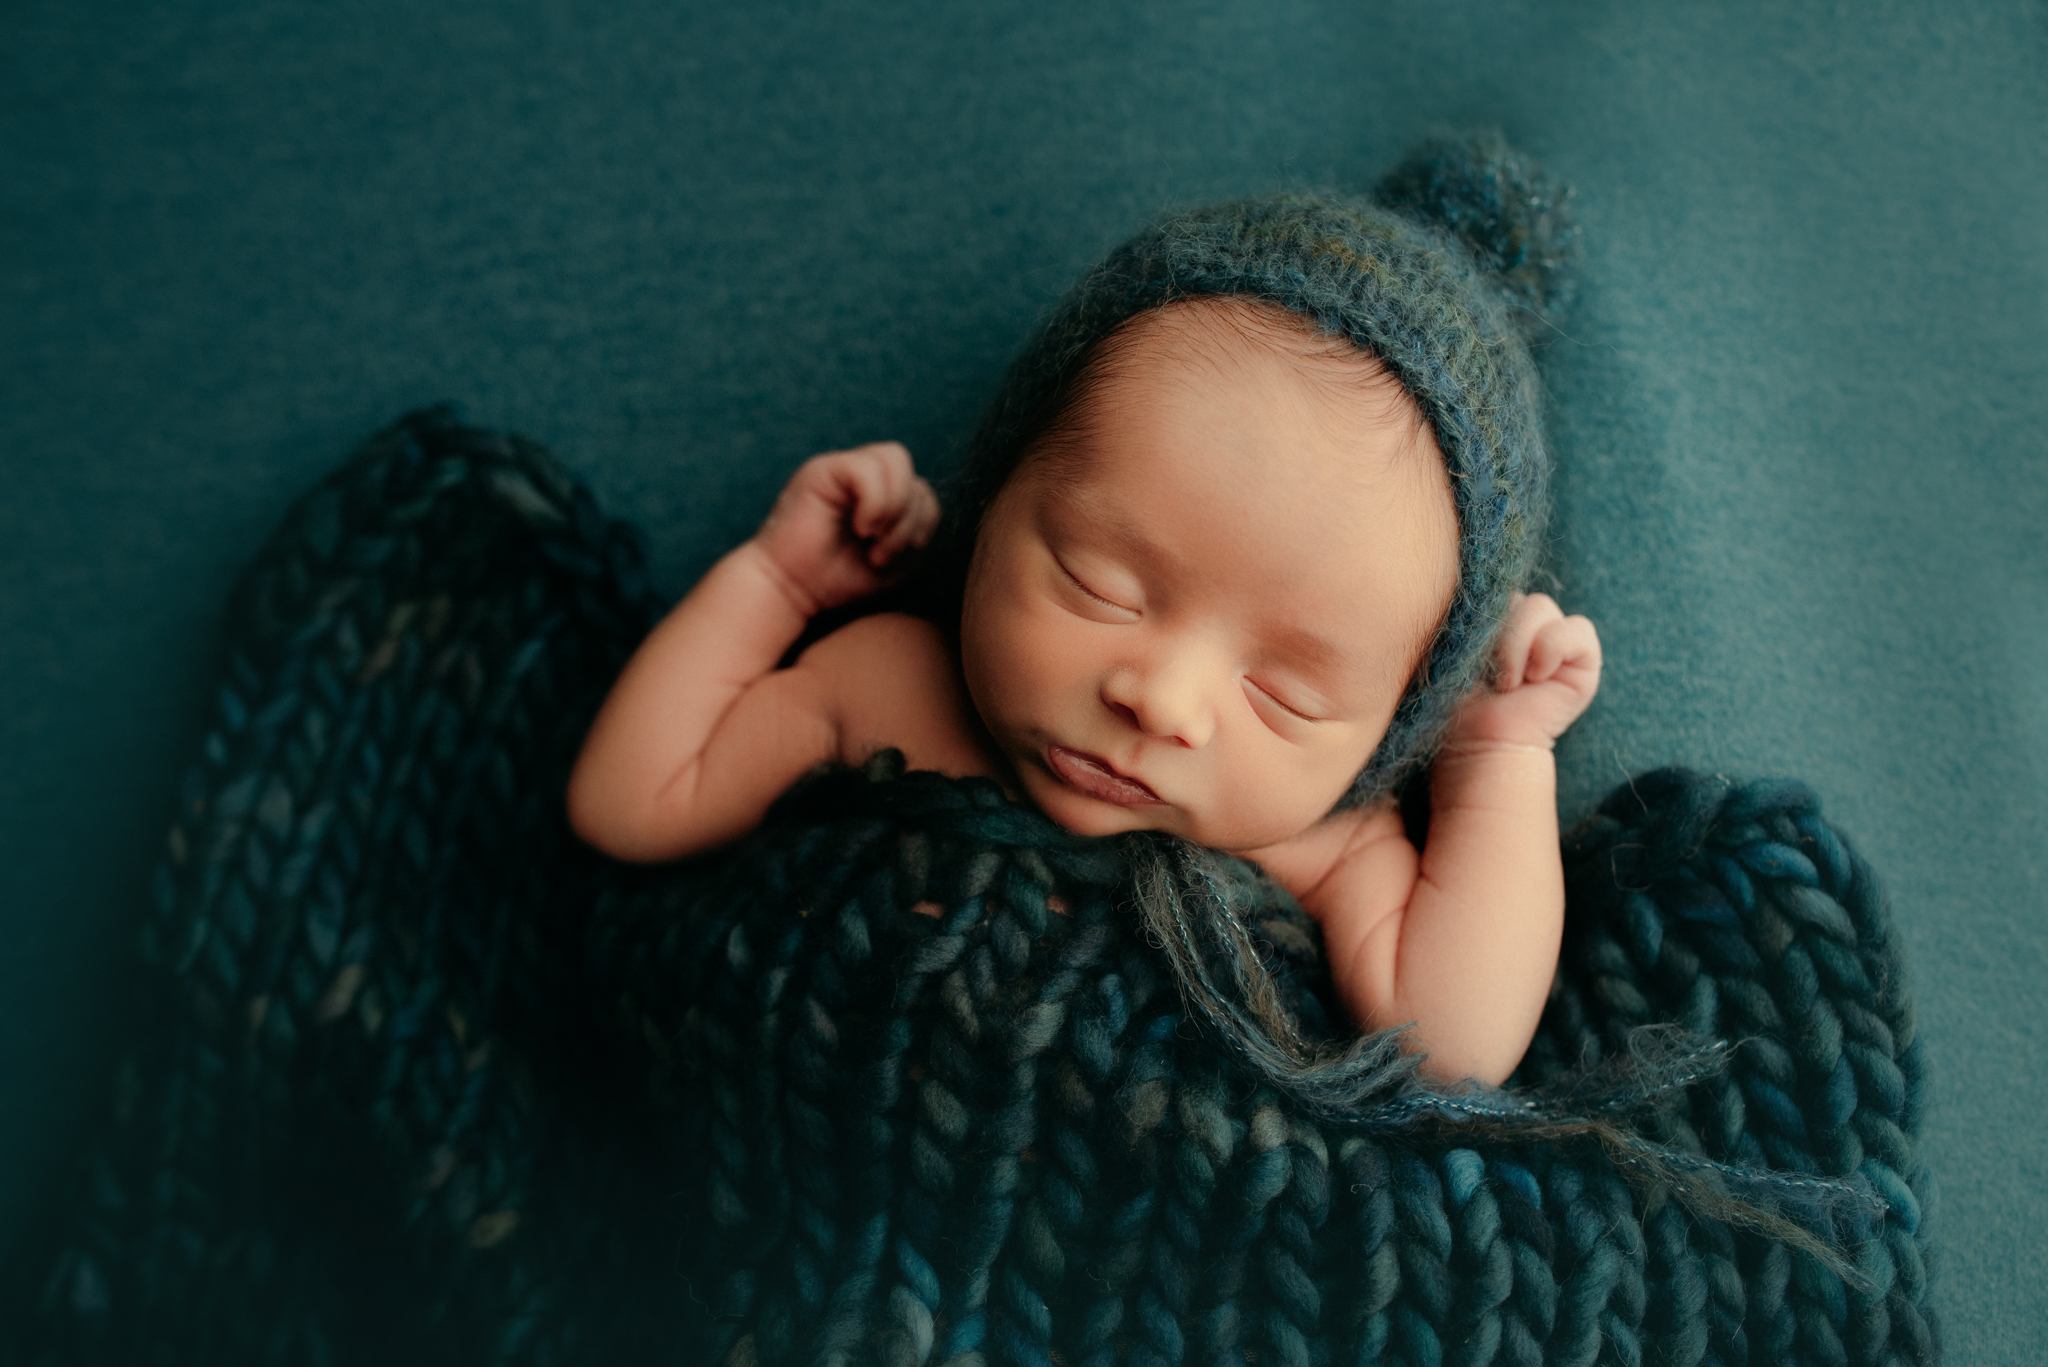 portland newborn photo session